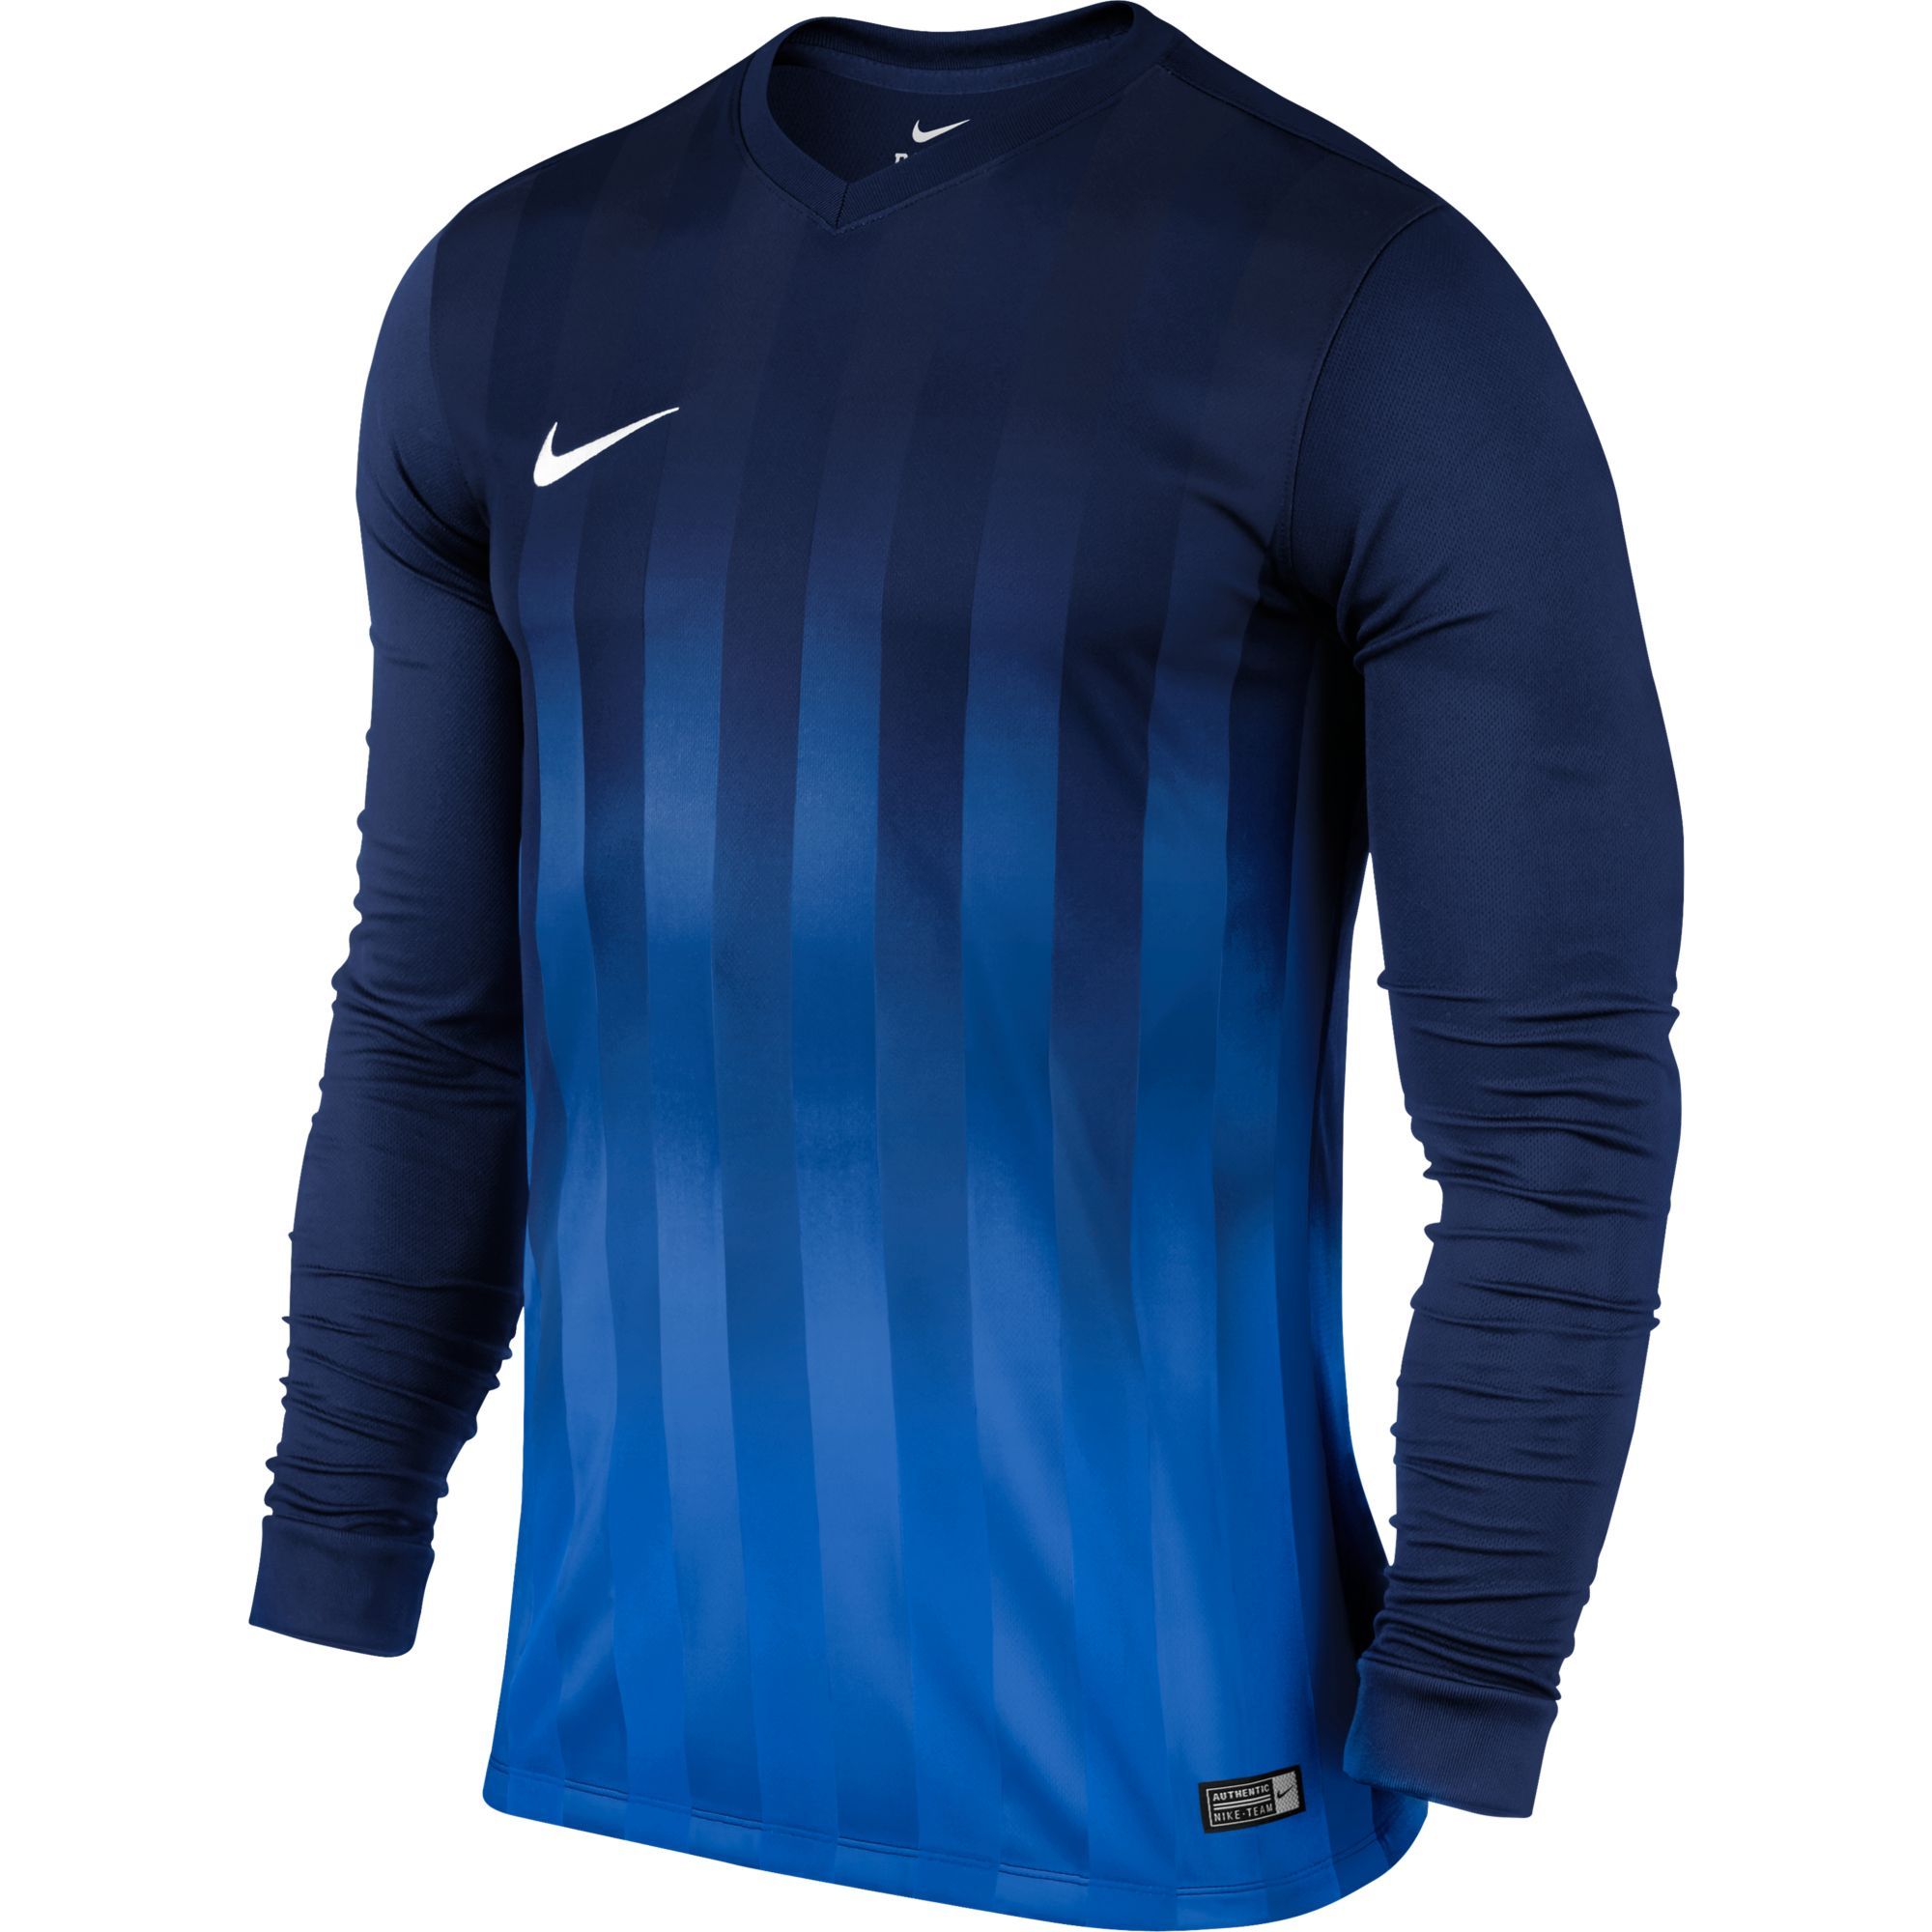 T-Shirt Sport Homme Manches Longues - Bleu Royal